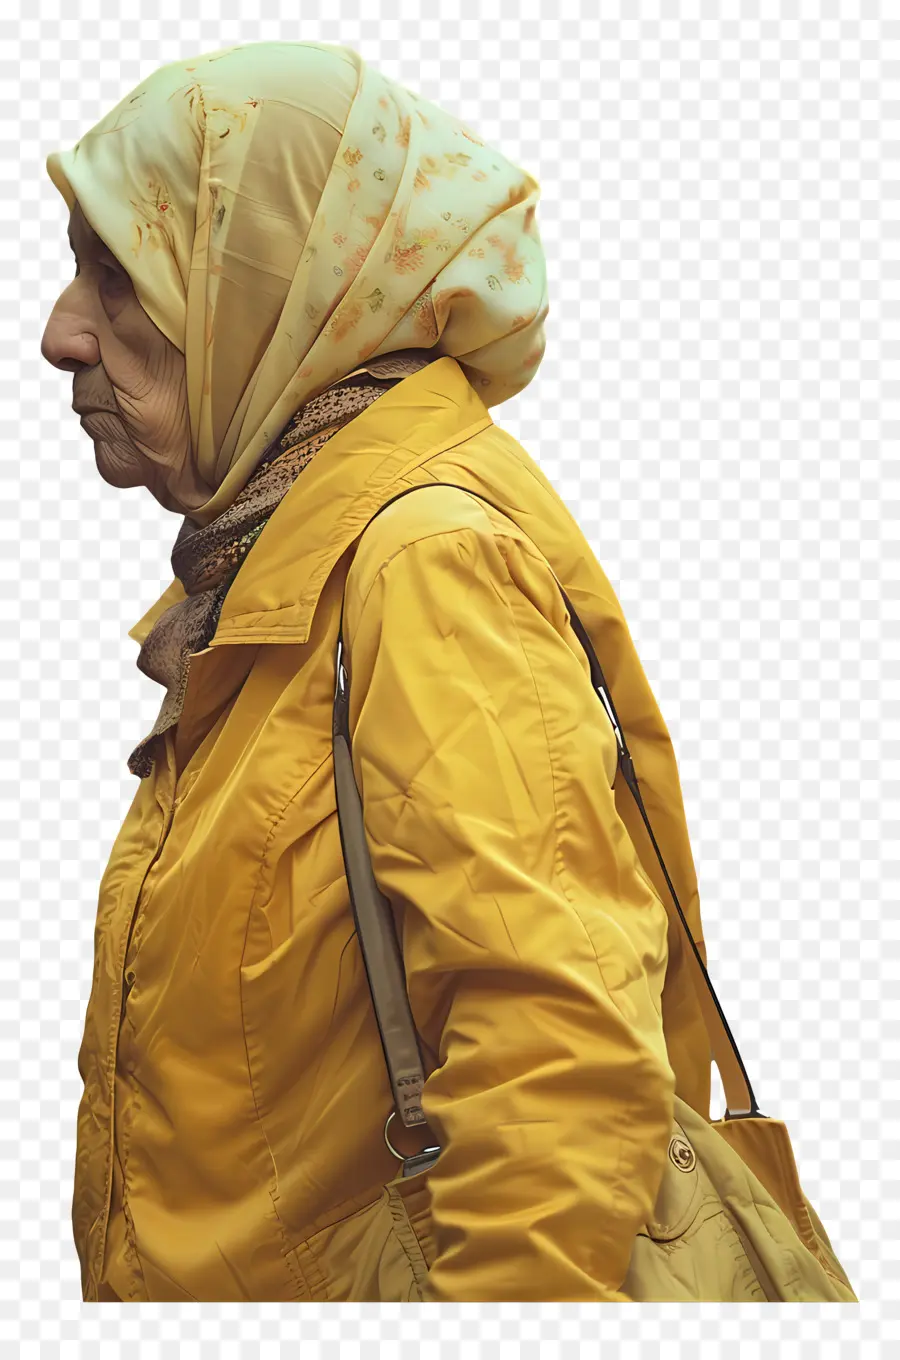 Handy - Ältere Frau in gelber Jacke mit Accessoires